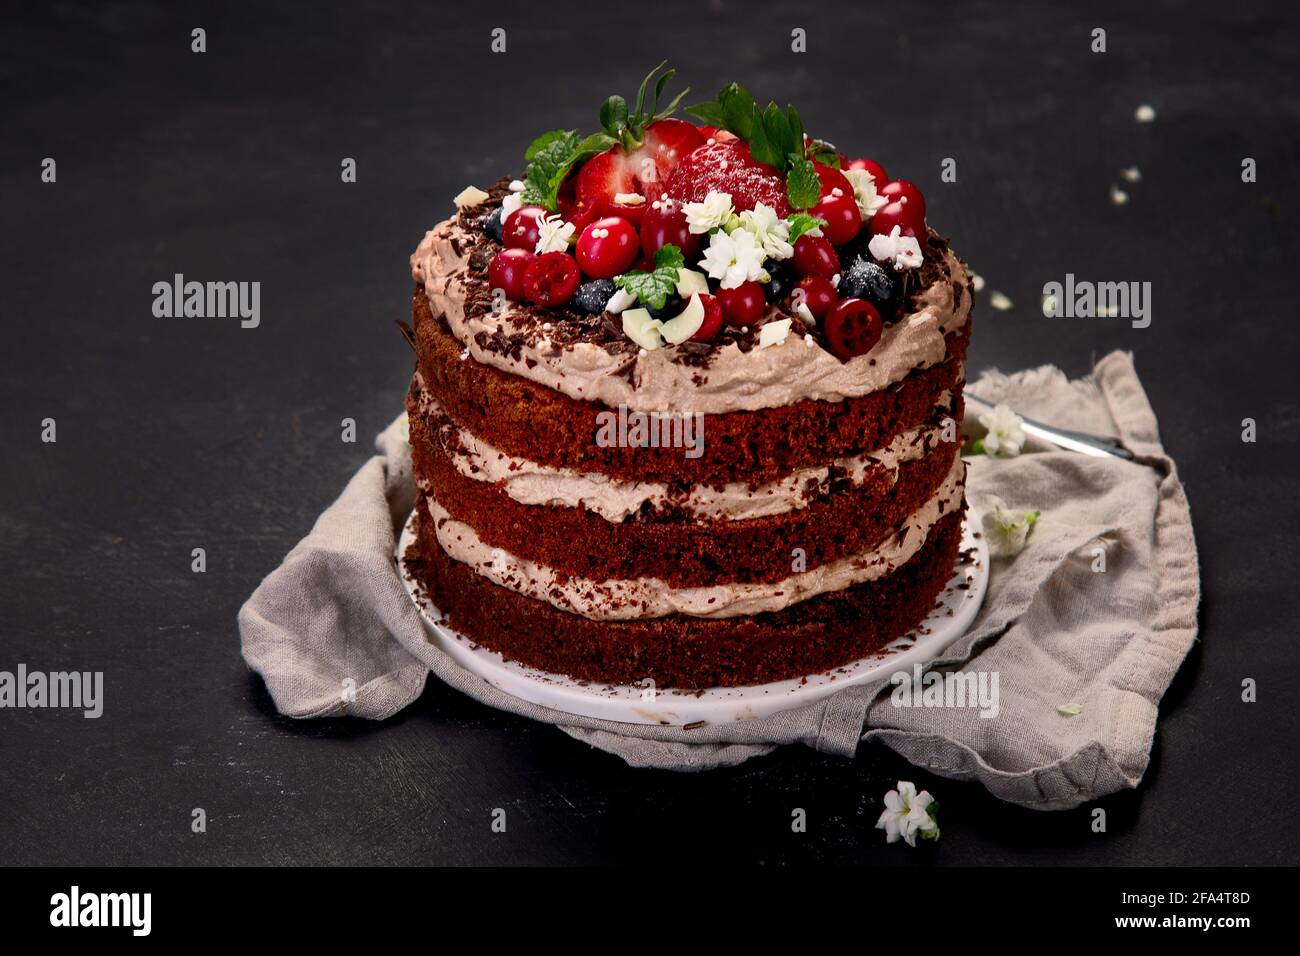 Delicious homemade chocolate cake with fresh berries and mascarpone cream on dark background. Stock Photo